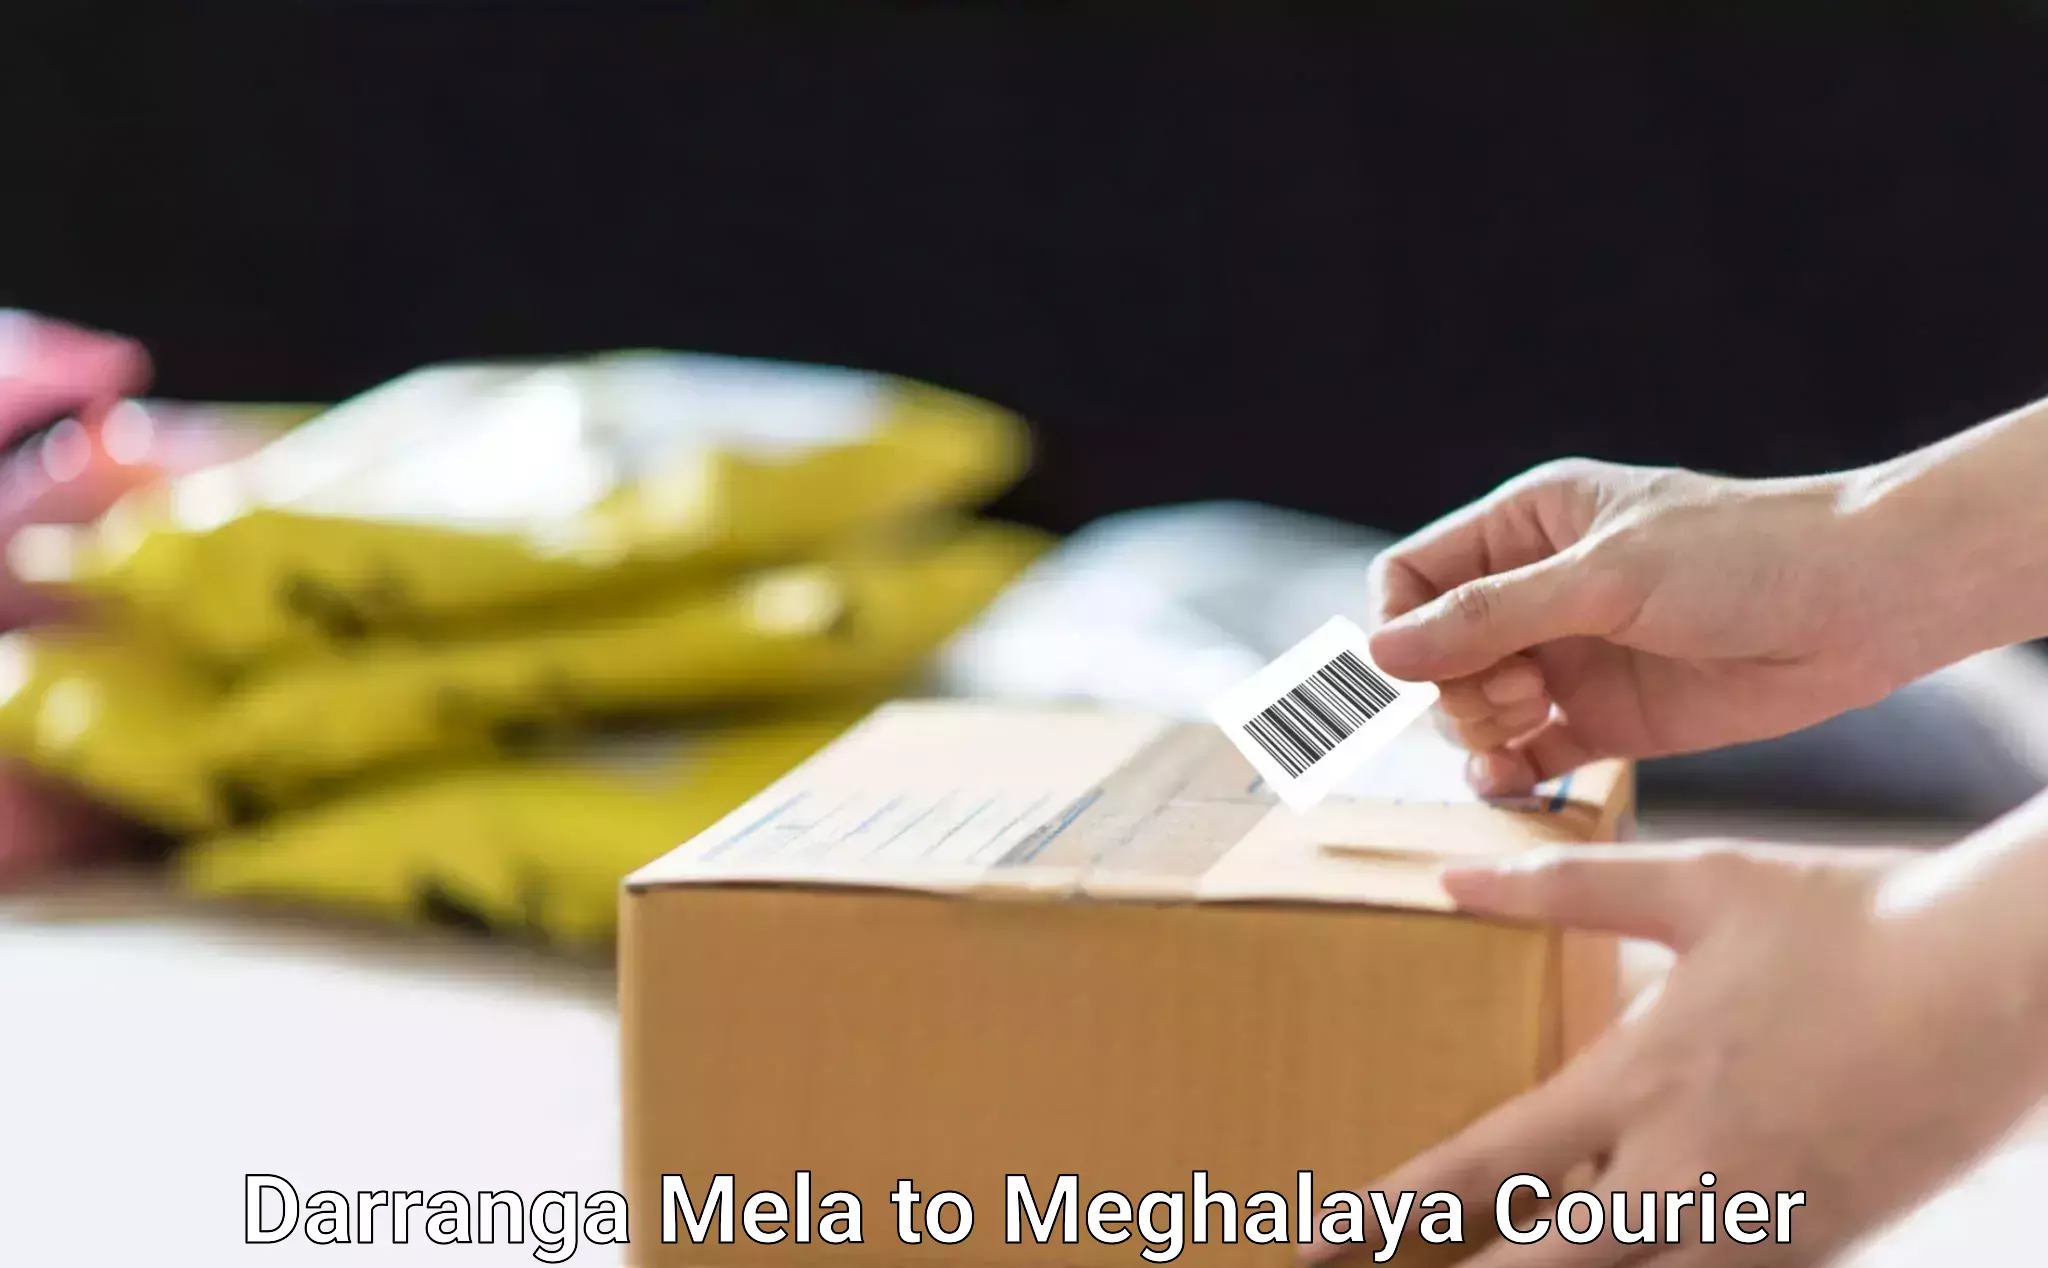 Professional courier handling Darranga Mela to Meghalaya